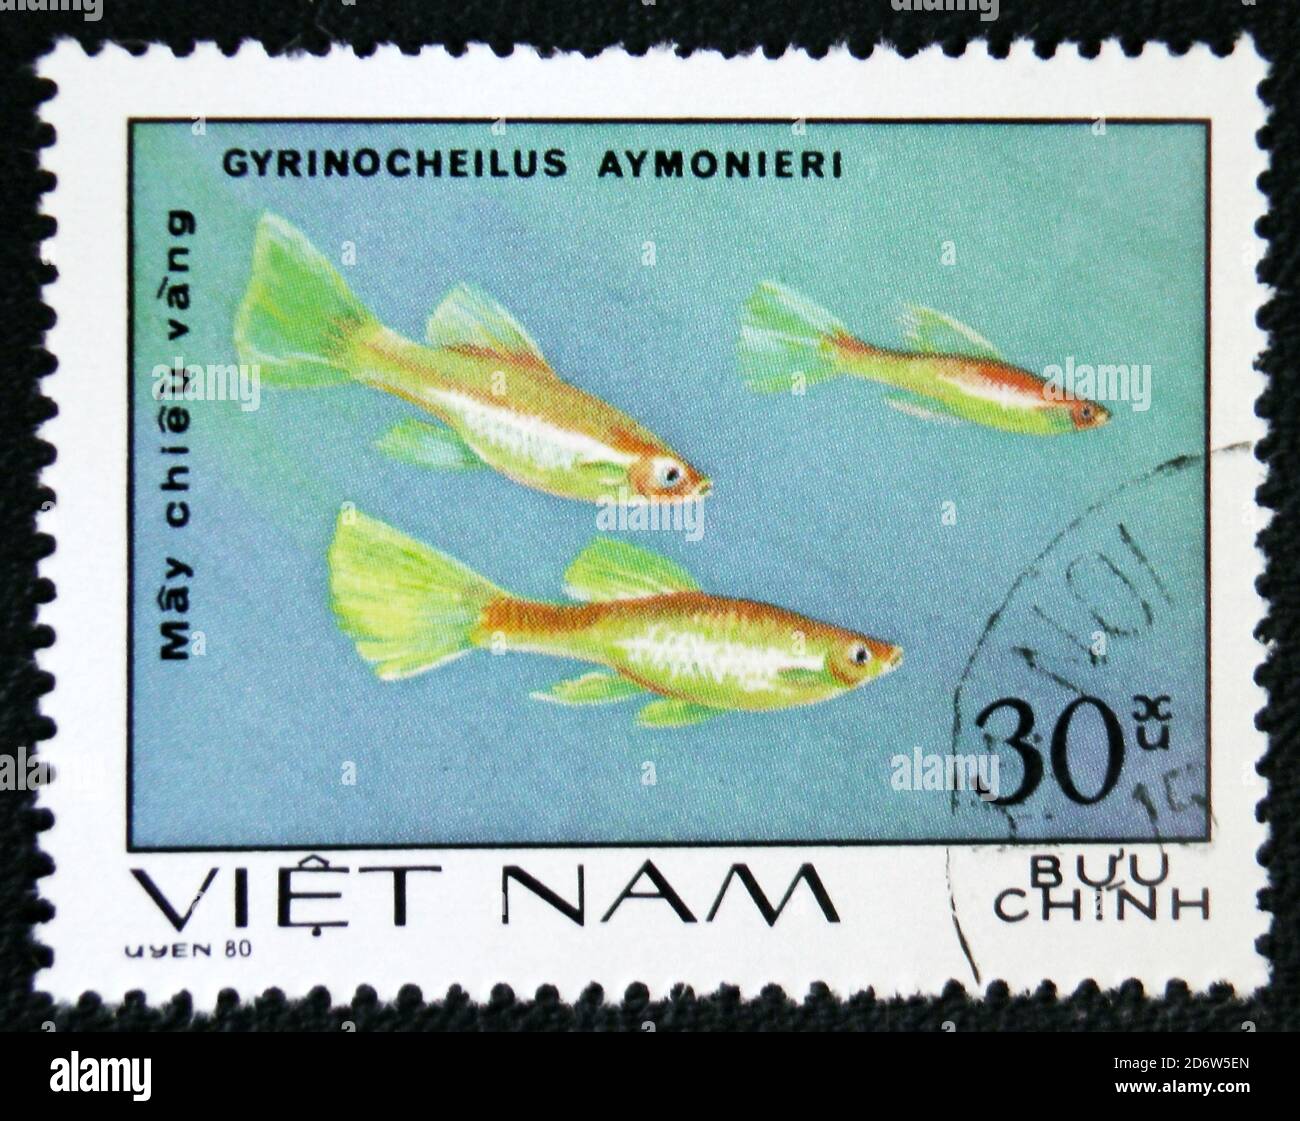 MOSCOW, RUSSIA - JANUARY 7, 2017: A postage stamp printed in the Vietnam shows Gyrinocheilus aymonieri fish, circa 1980 Stock Photo